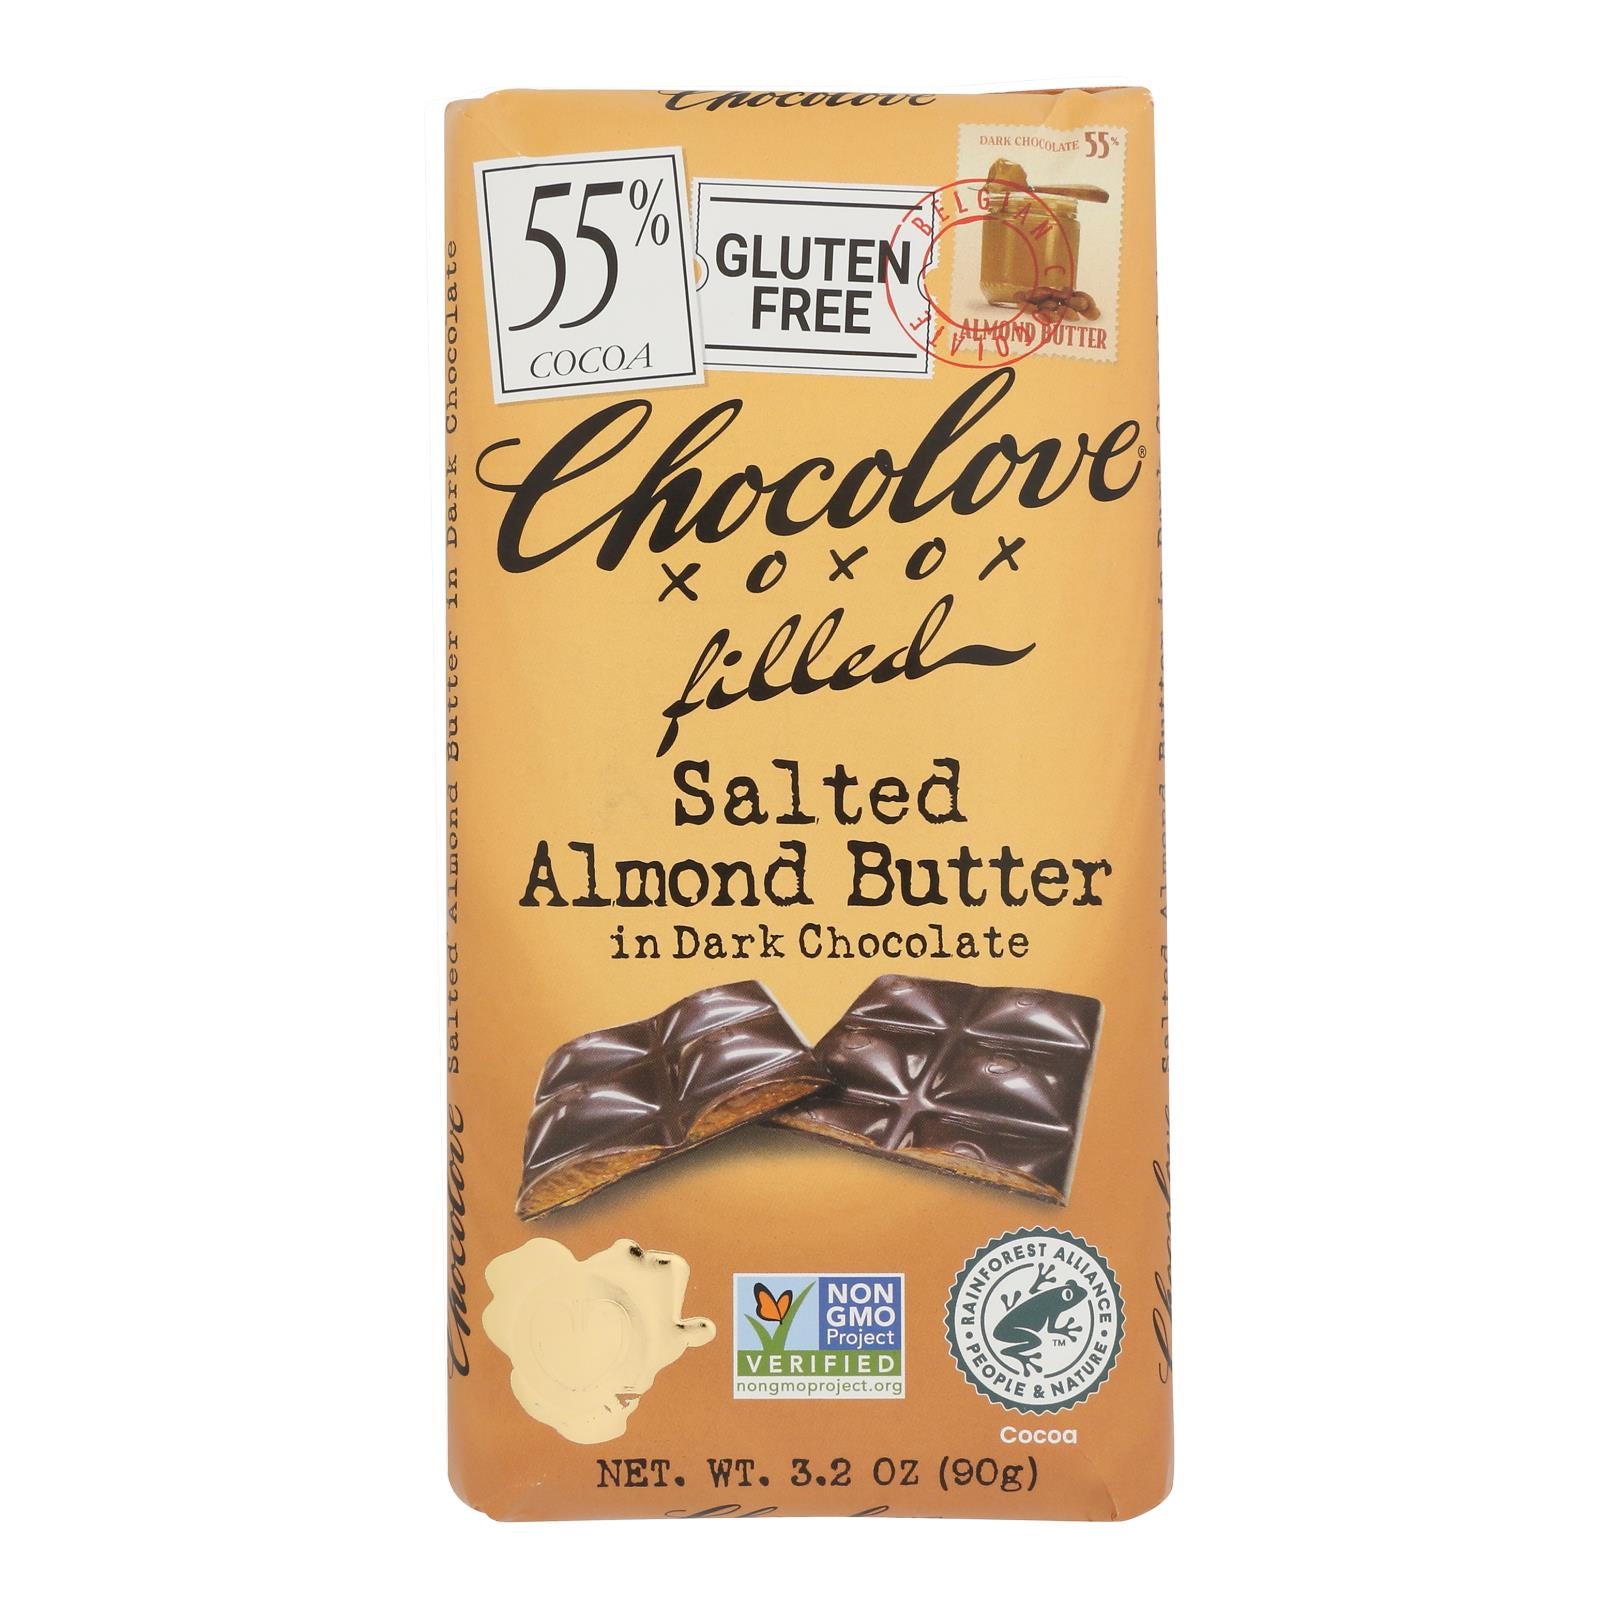 Chocolove Xoxox - Dark Chocolate Bar - Salted Almond Butter - Case of 10 - 3.2 oz